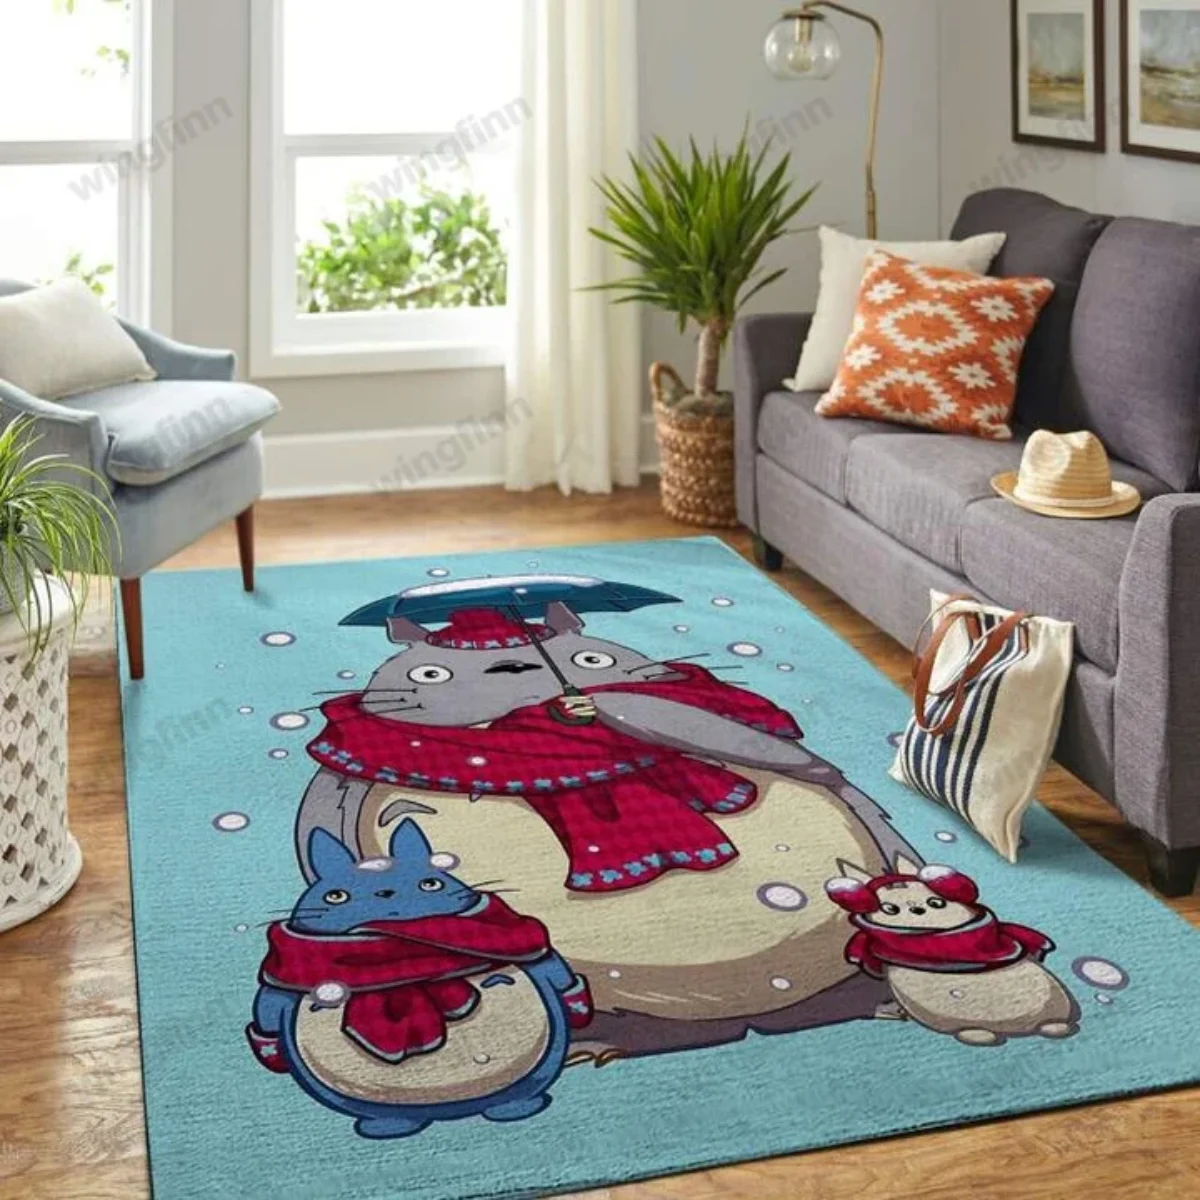 Totoro Bathroom Mat, Totoro Rug, Totoro Carpet, Waterproof Mat